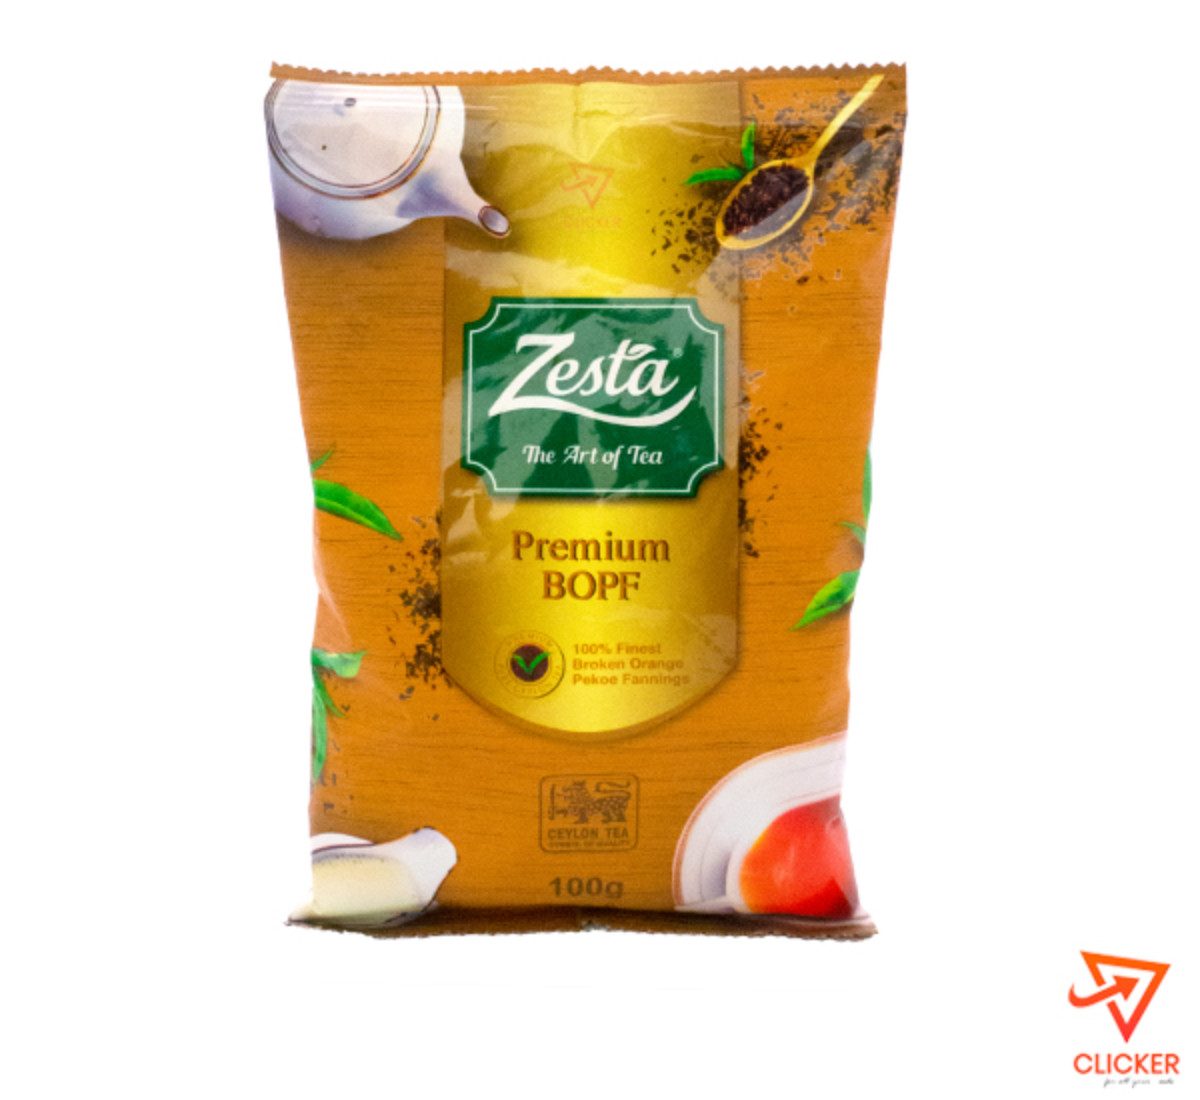 Clicker product 100g ZESTA Tea 910